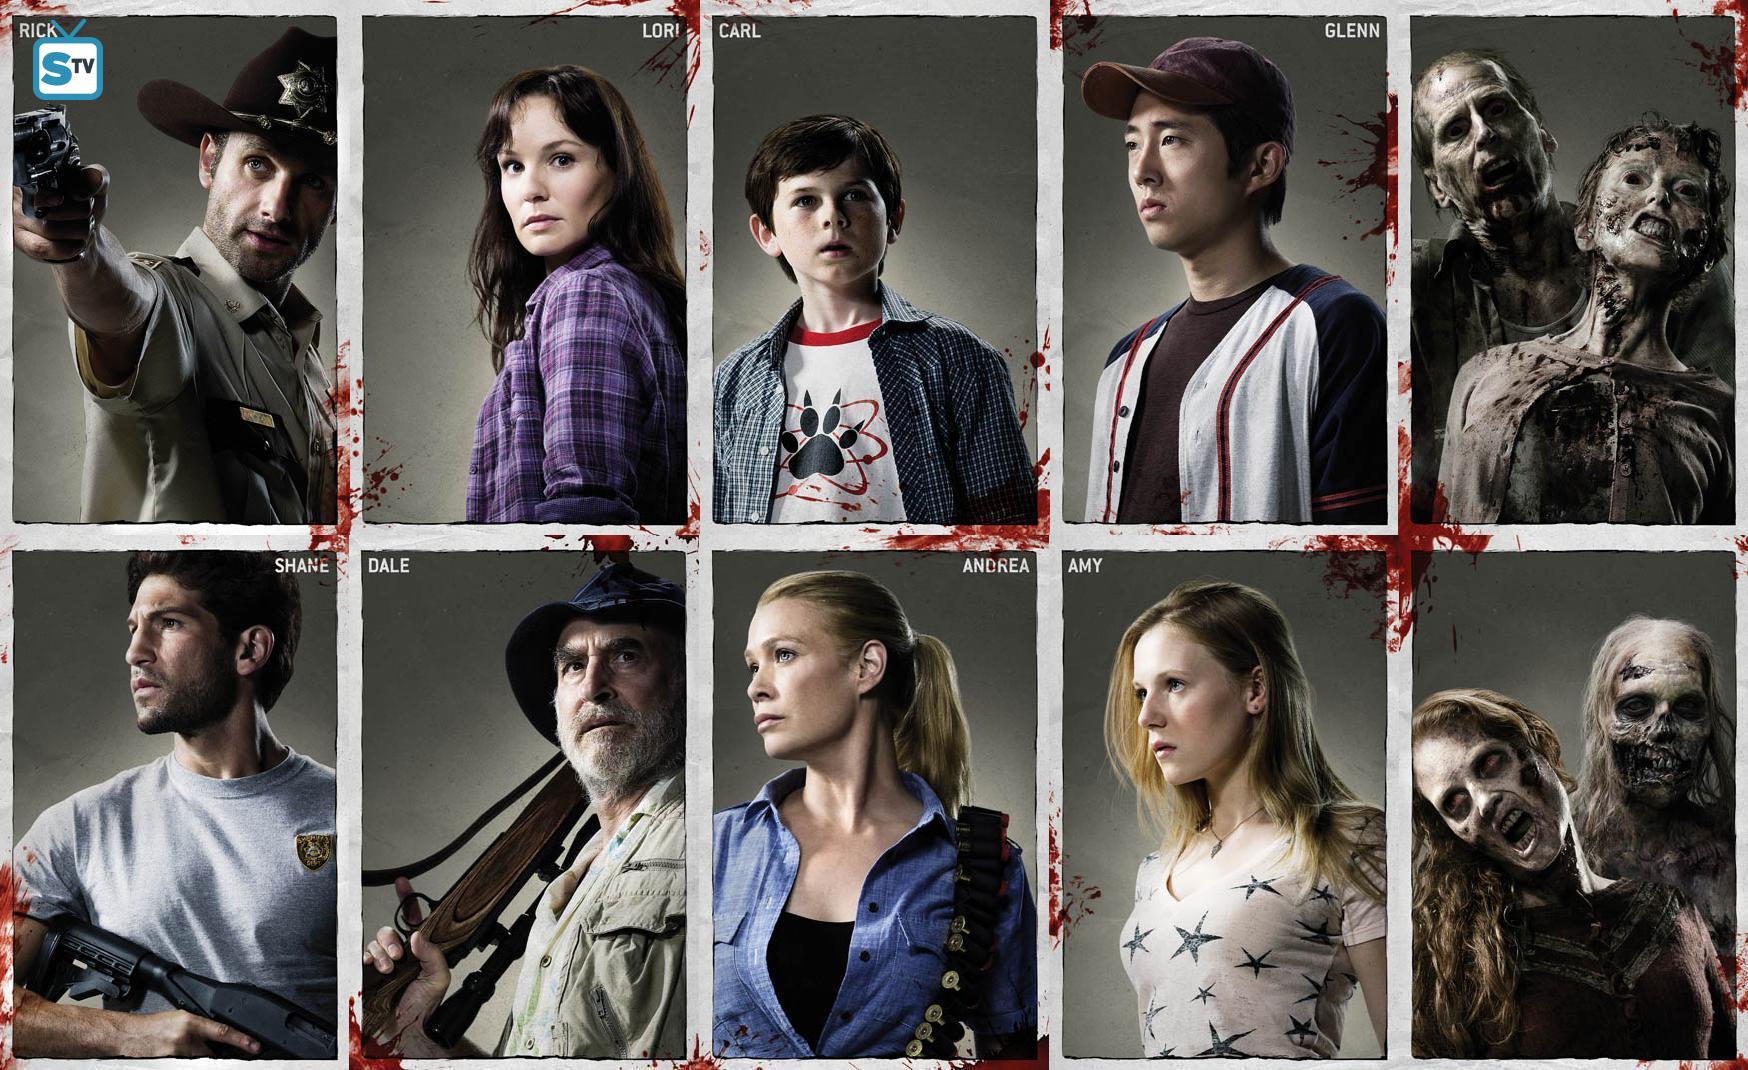 The Walking Dead: Season 1 Backgrounds on Wallpapers Vista